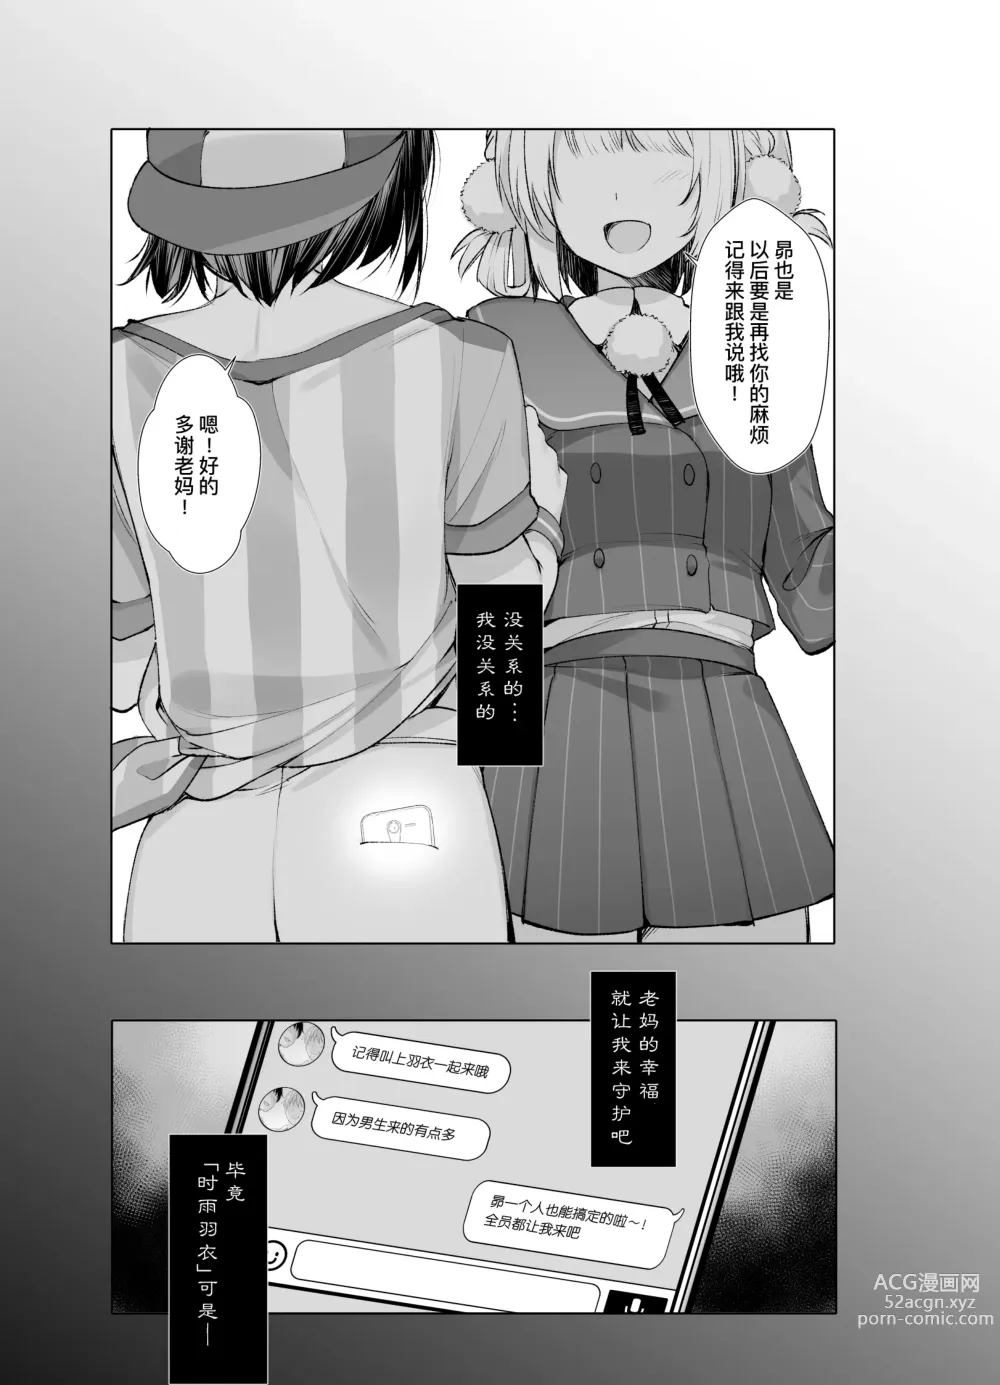 Page 34 of doujinshi 晴天、偶有细雨